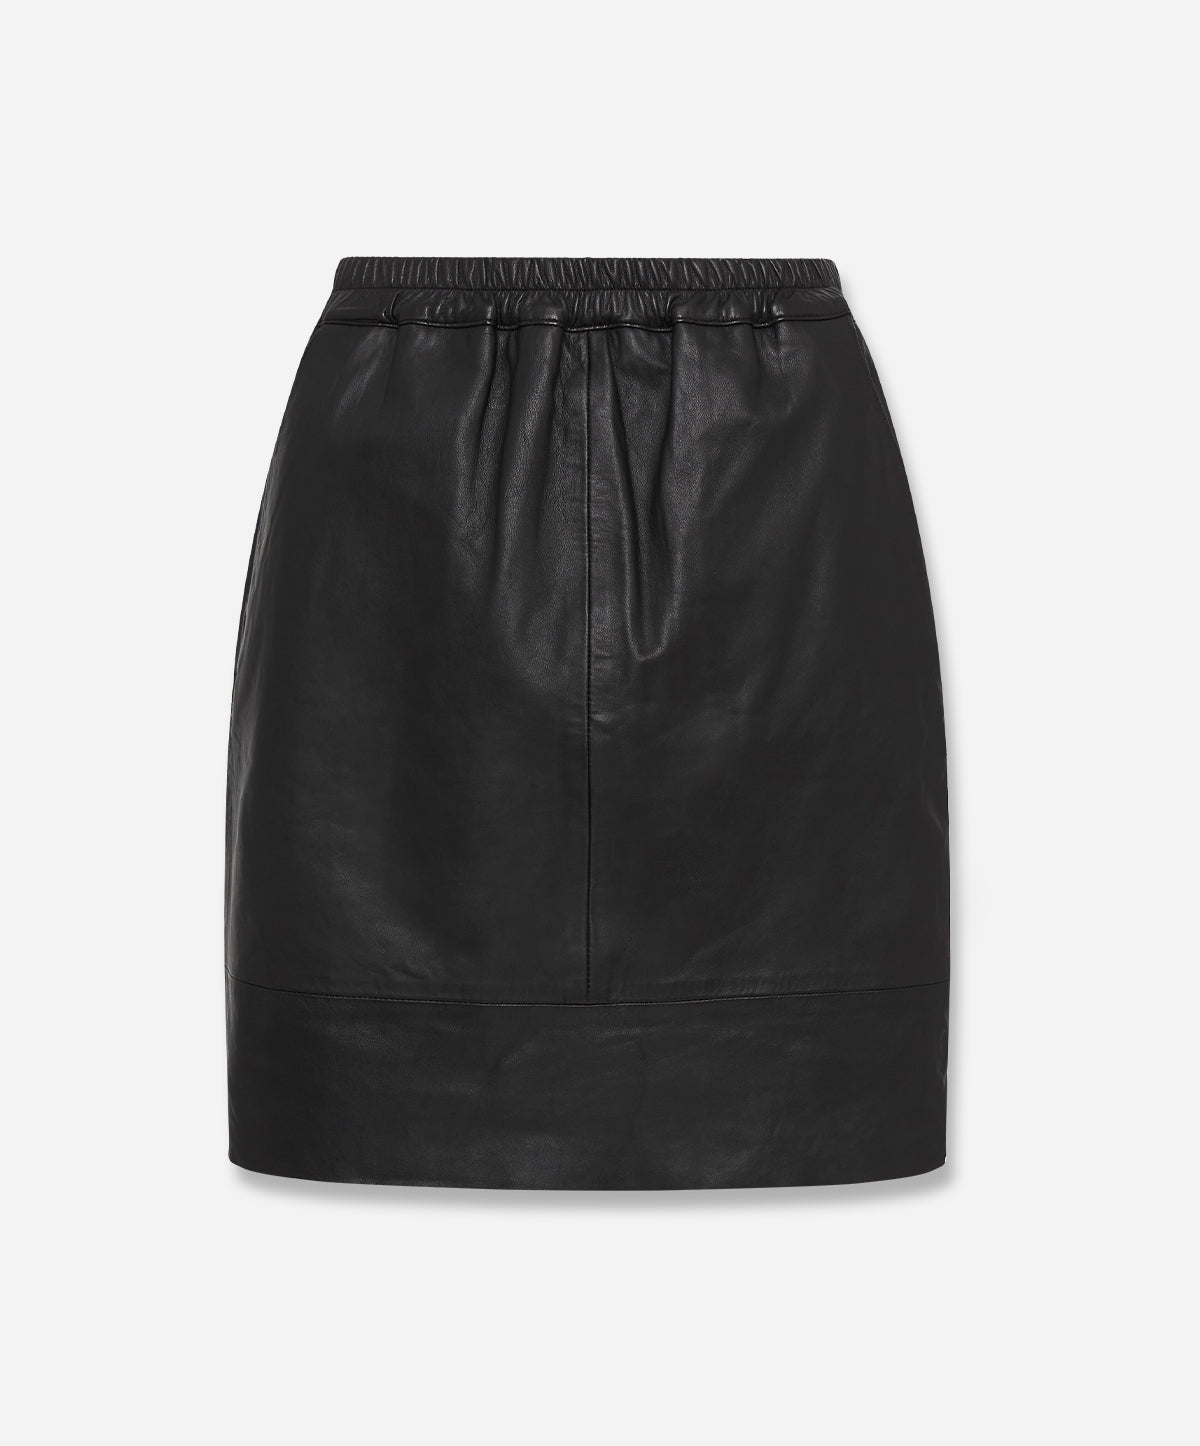 Heart Leather Skirt